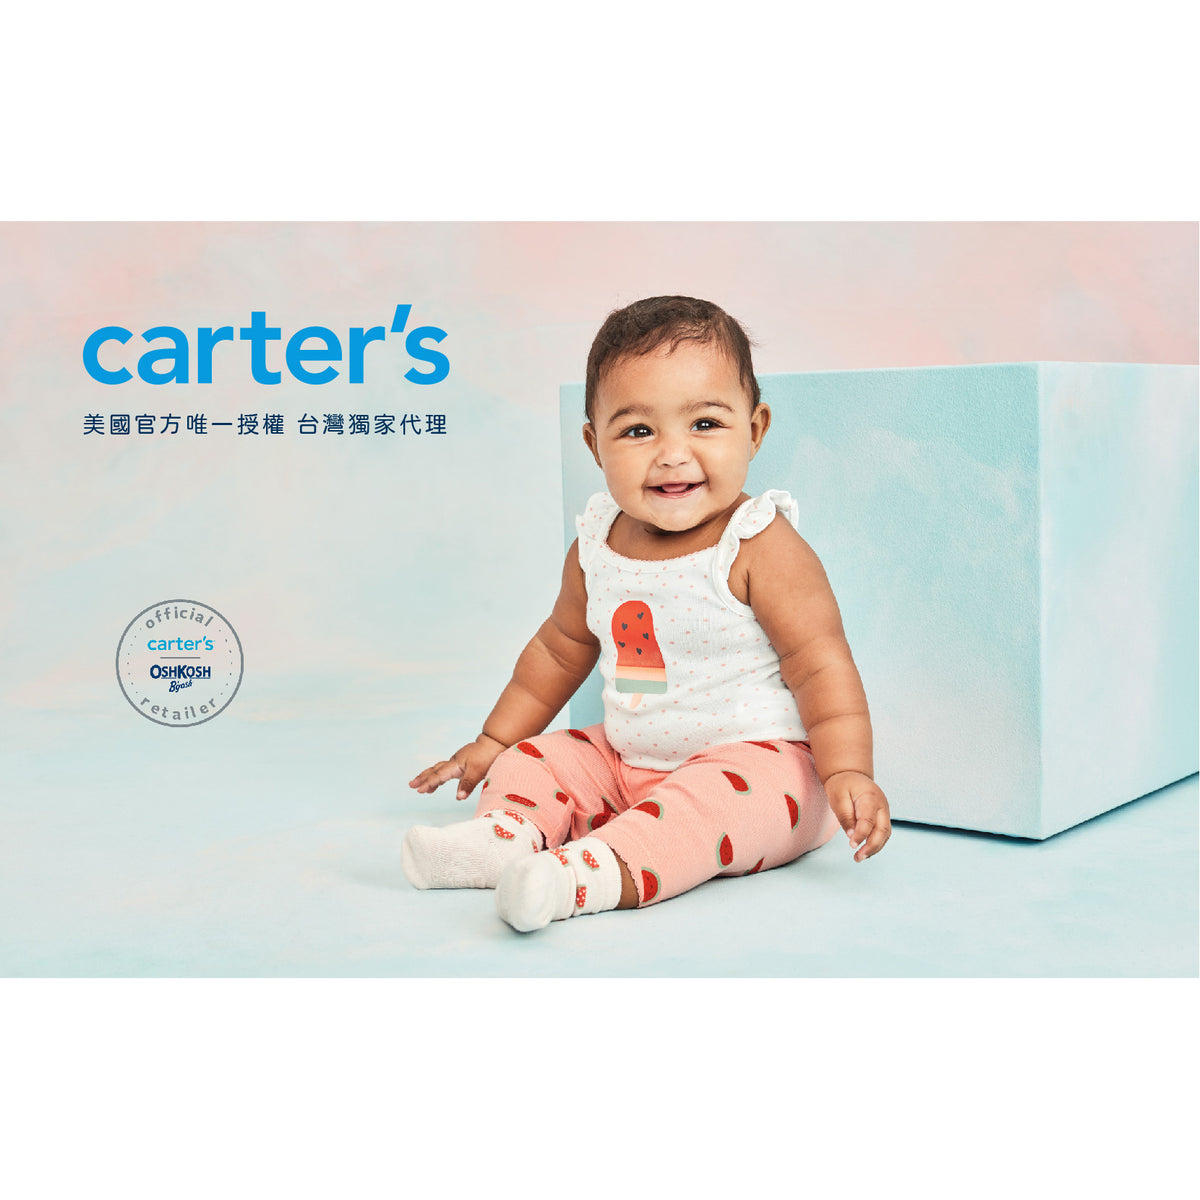 Carter's 原色牛仔鬆緊長褲(6M-24M)